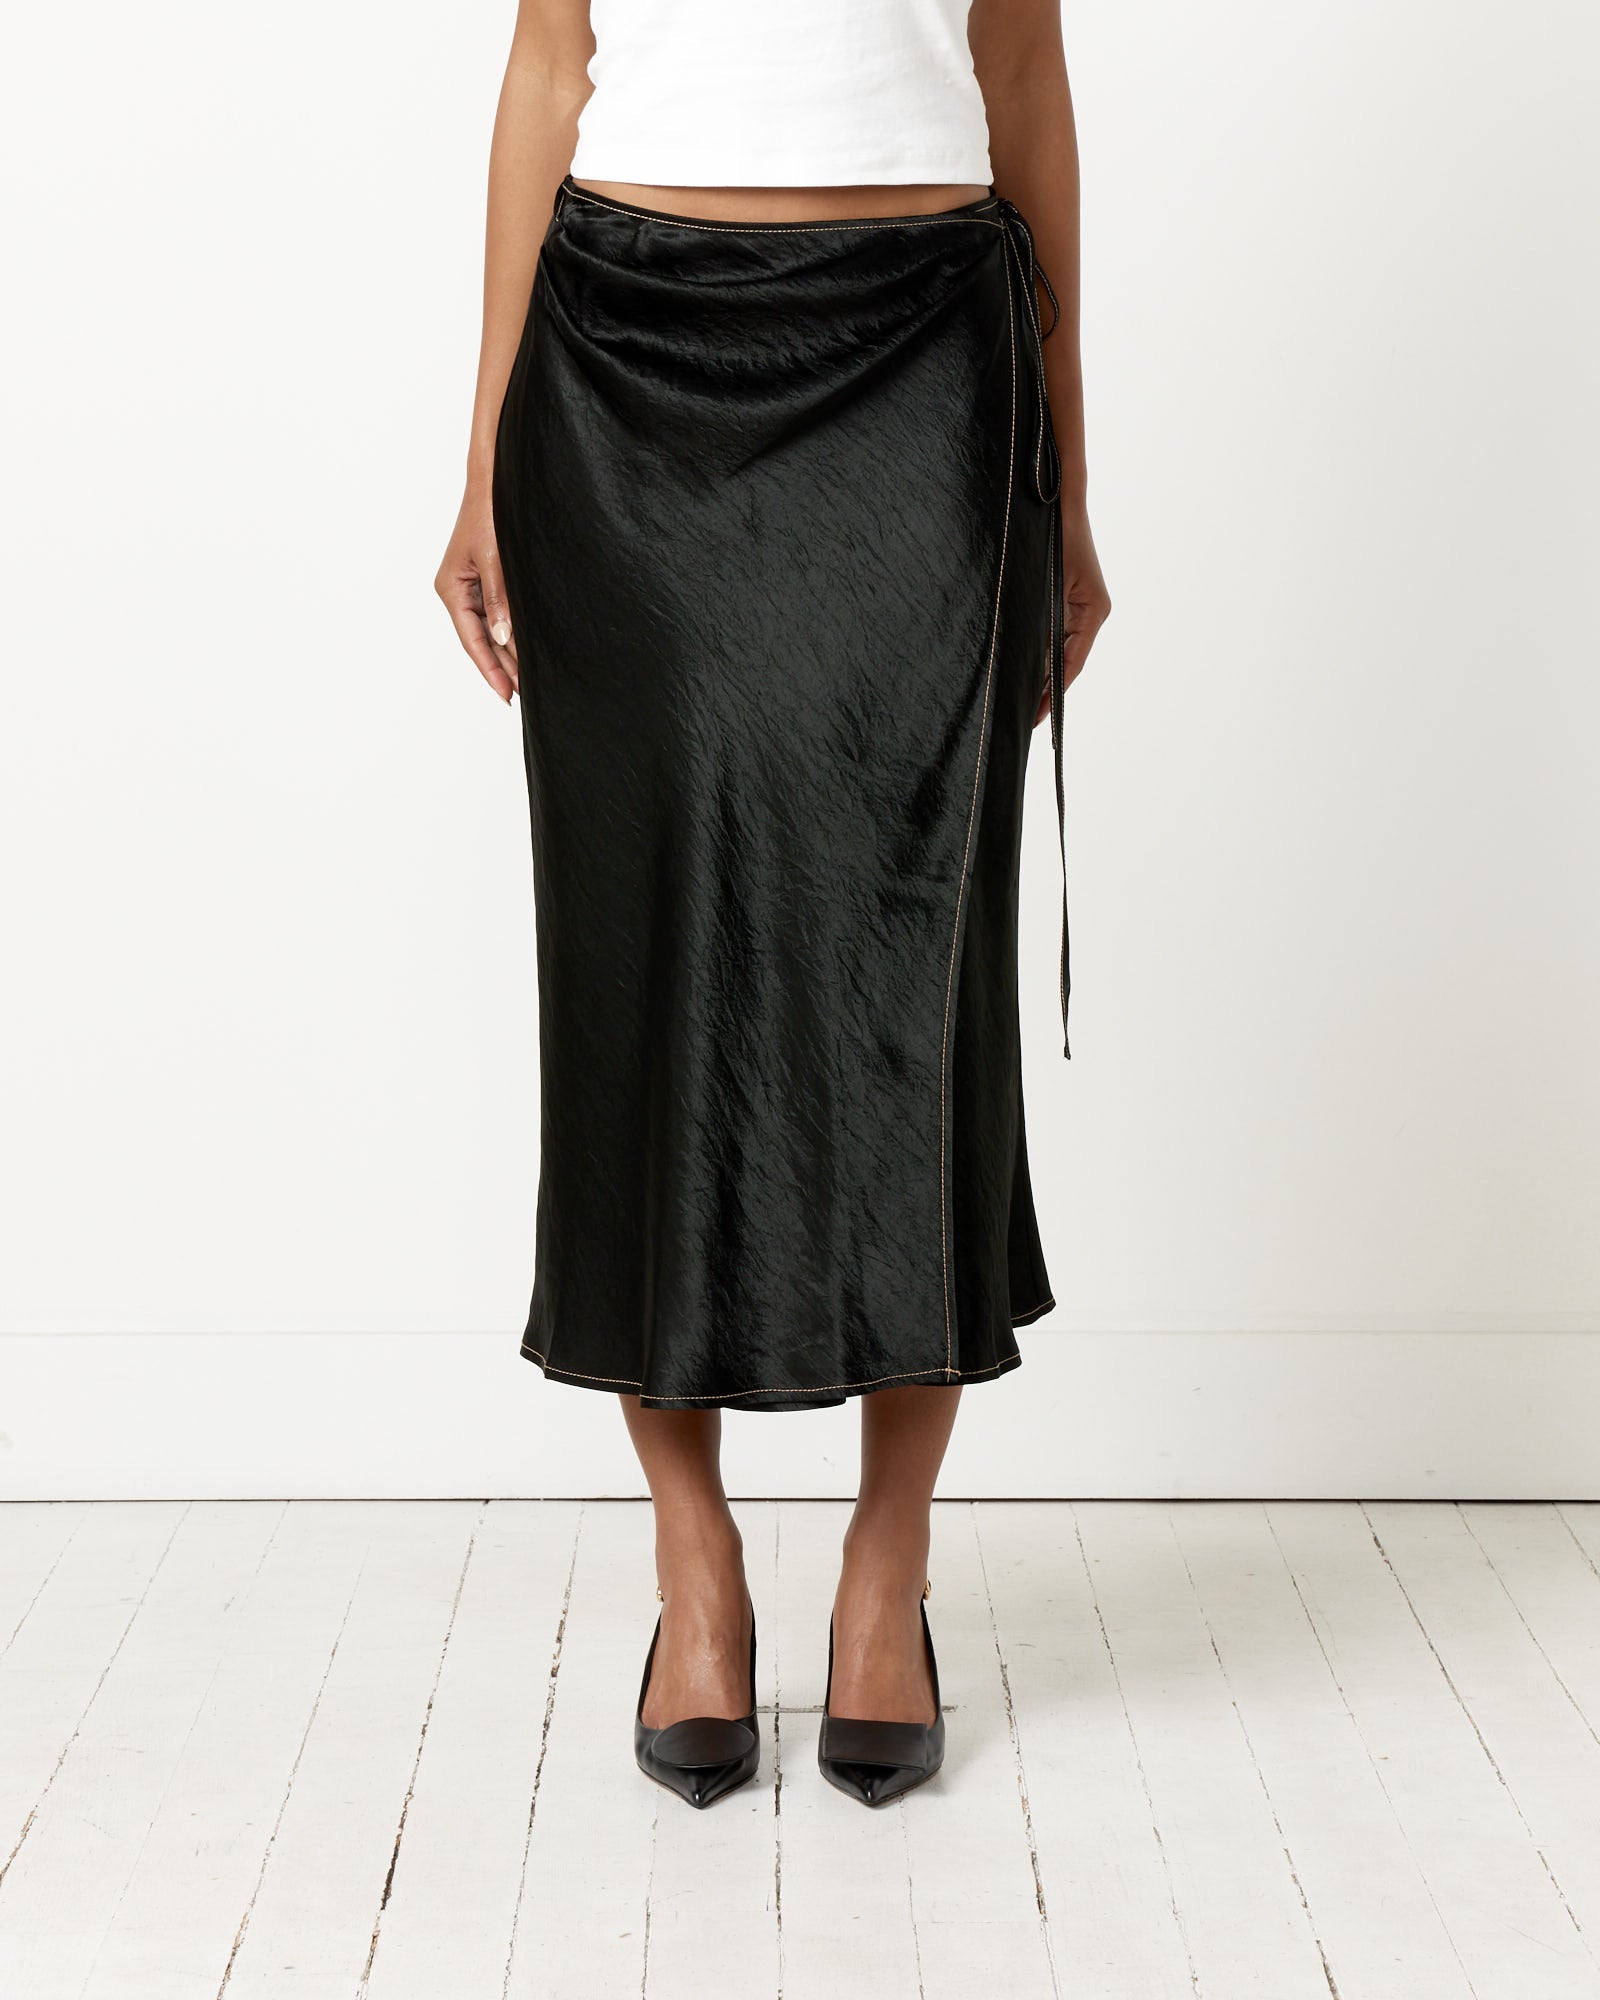 Satin Wrap Skirt in Black